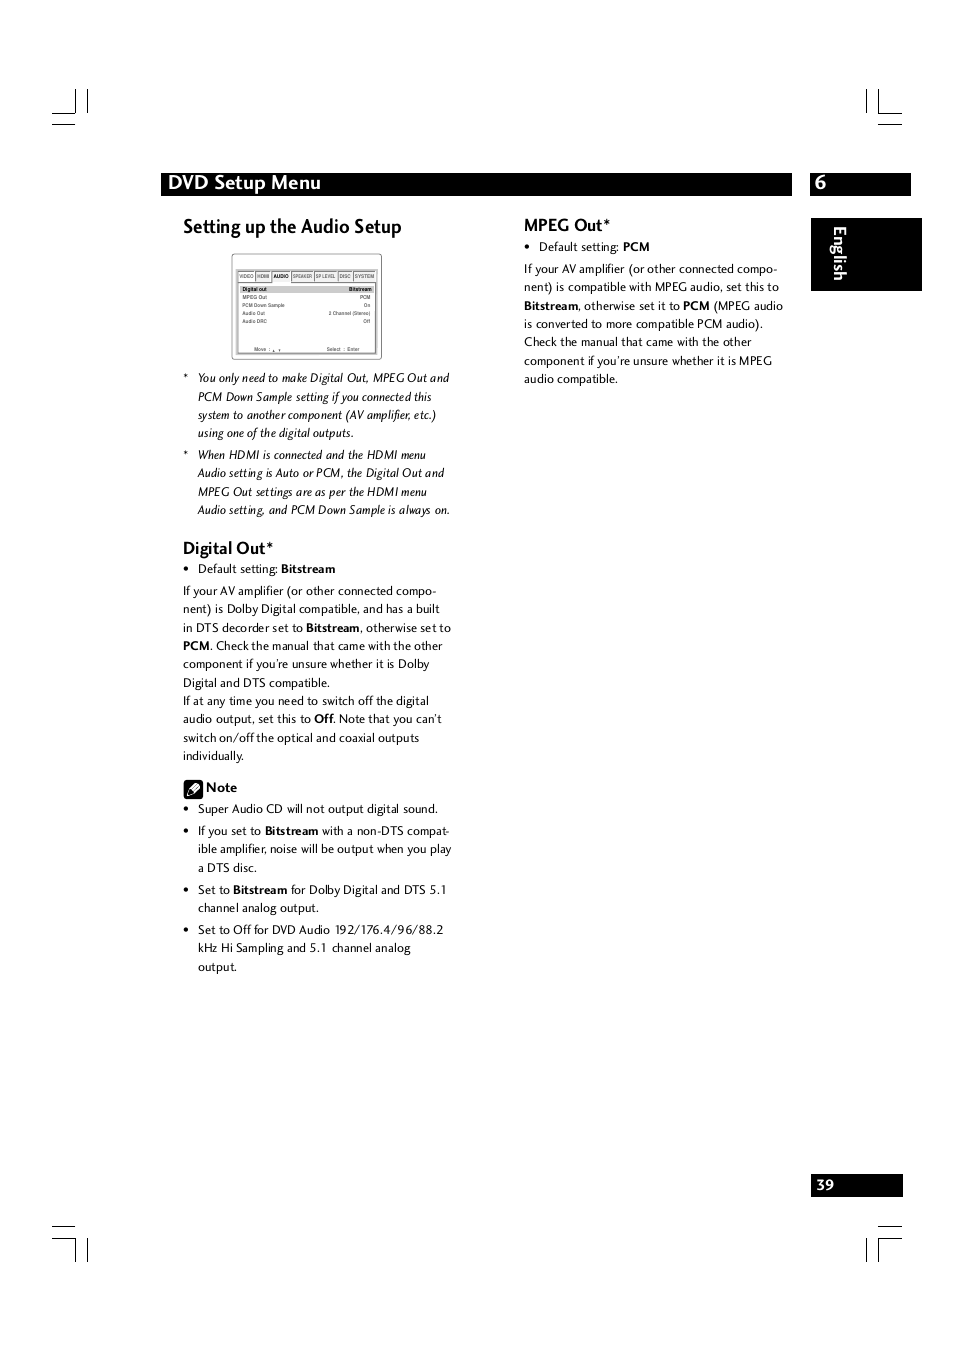 6dvd setup menu, Setting up the audio setup, English | Digital out, Mpeg out | Marantz DV7600 User Manual | Page 39 / 56